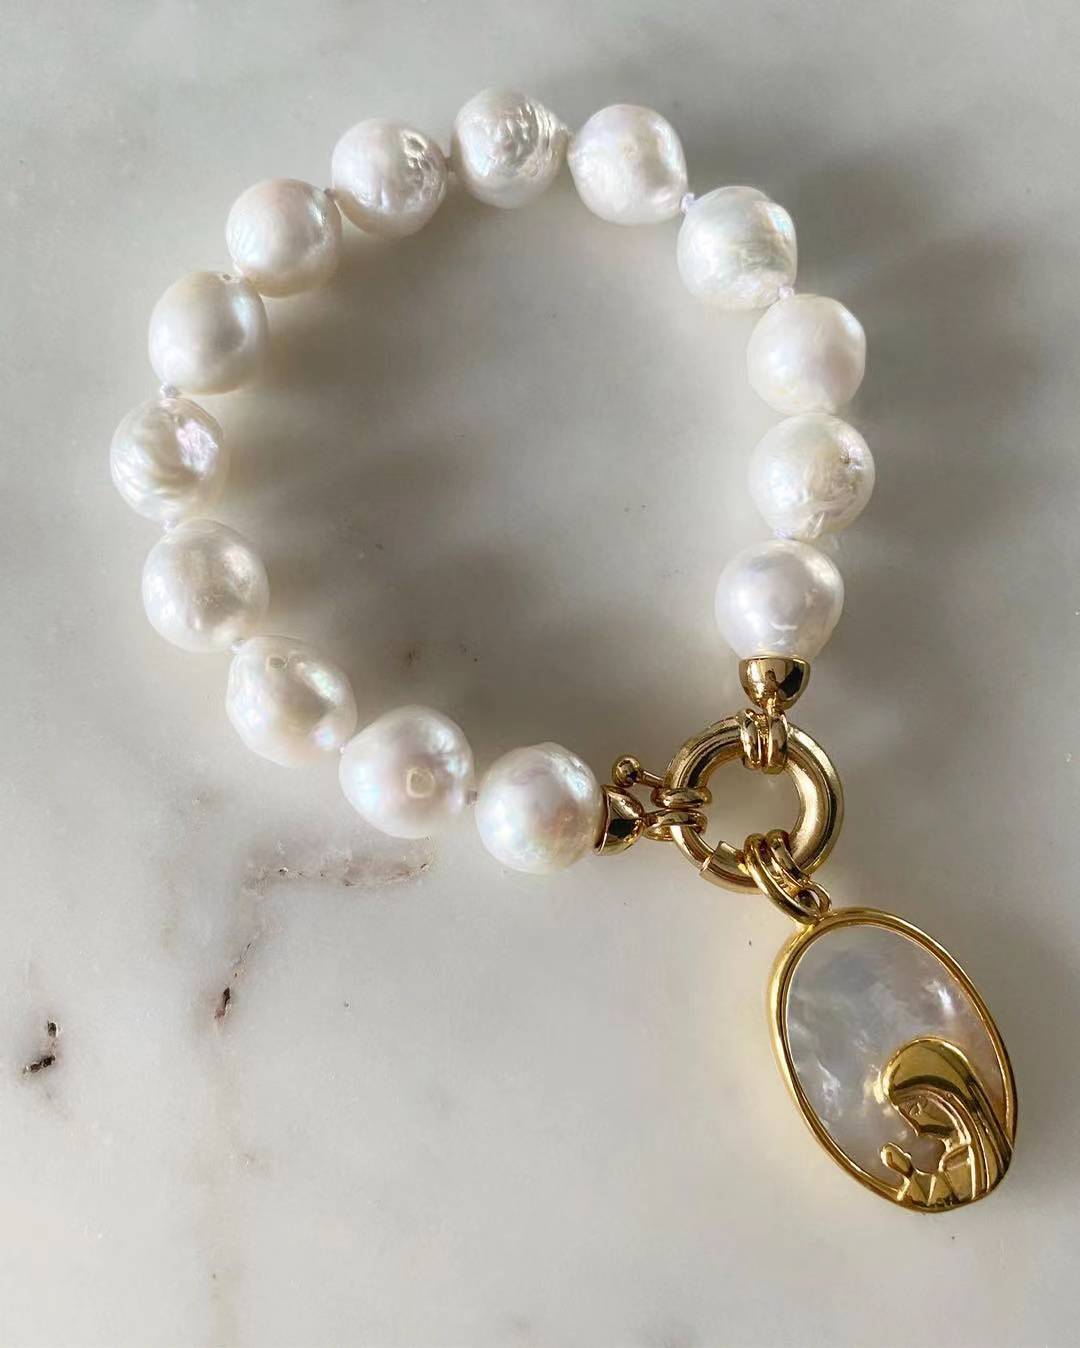 Our Lady of Lourdes Baroque Pearl Bracelet